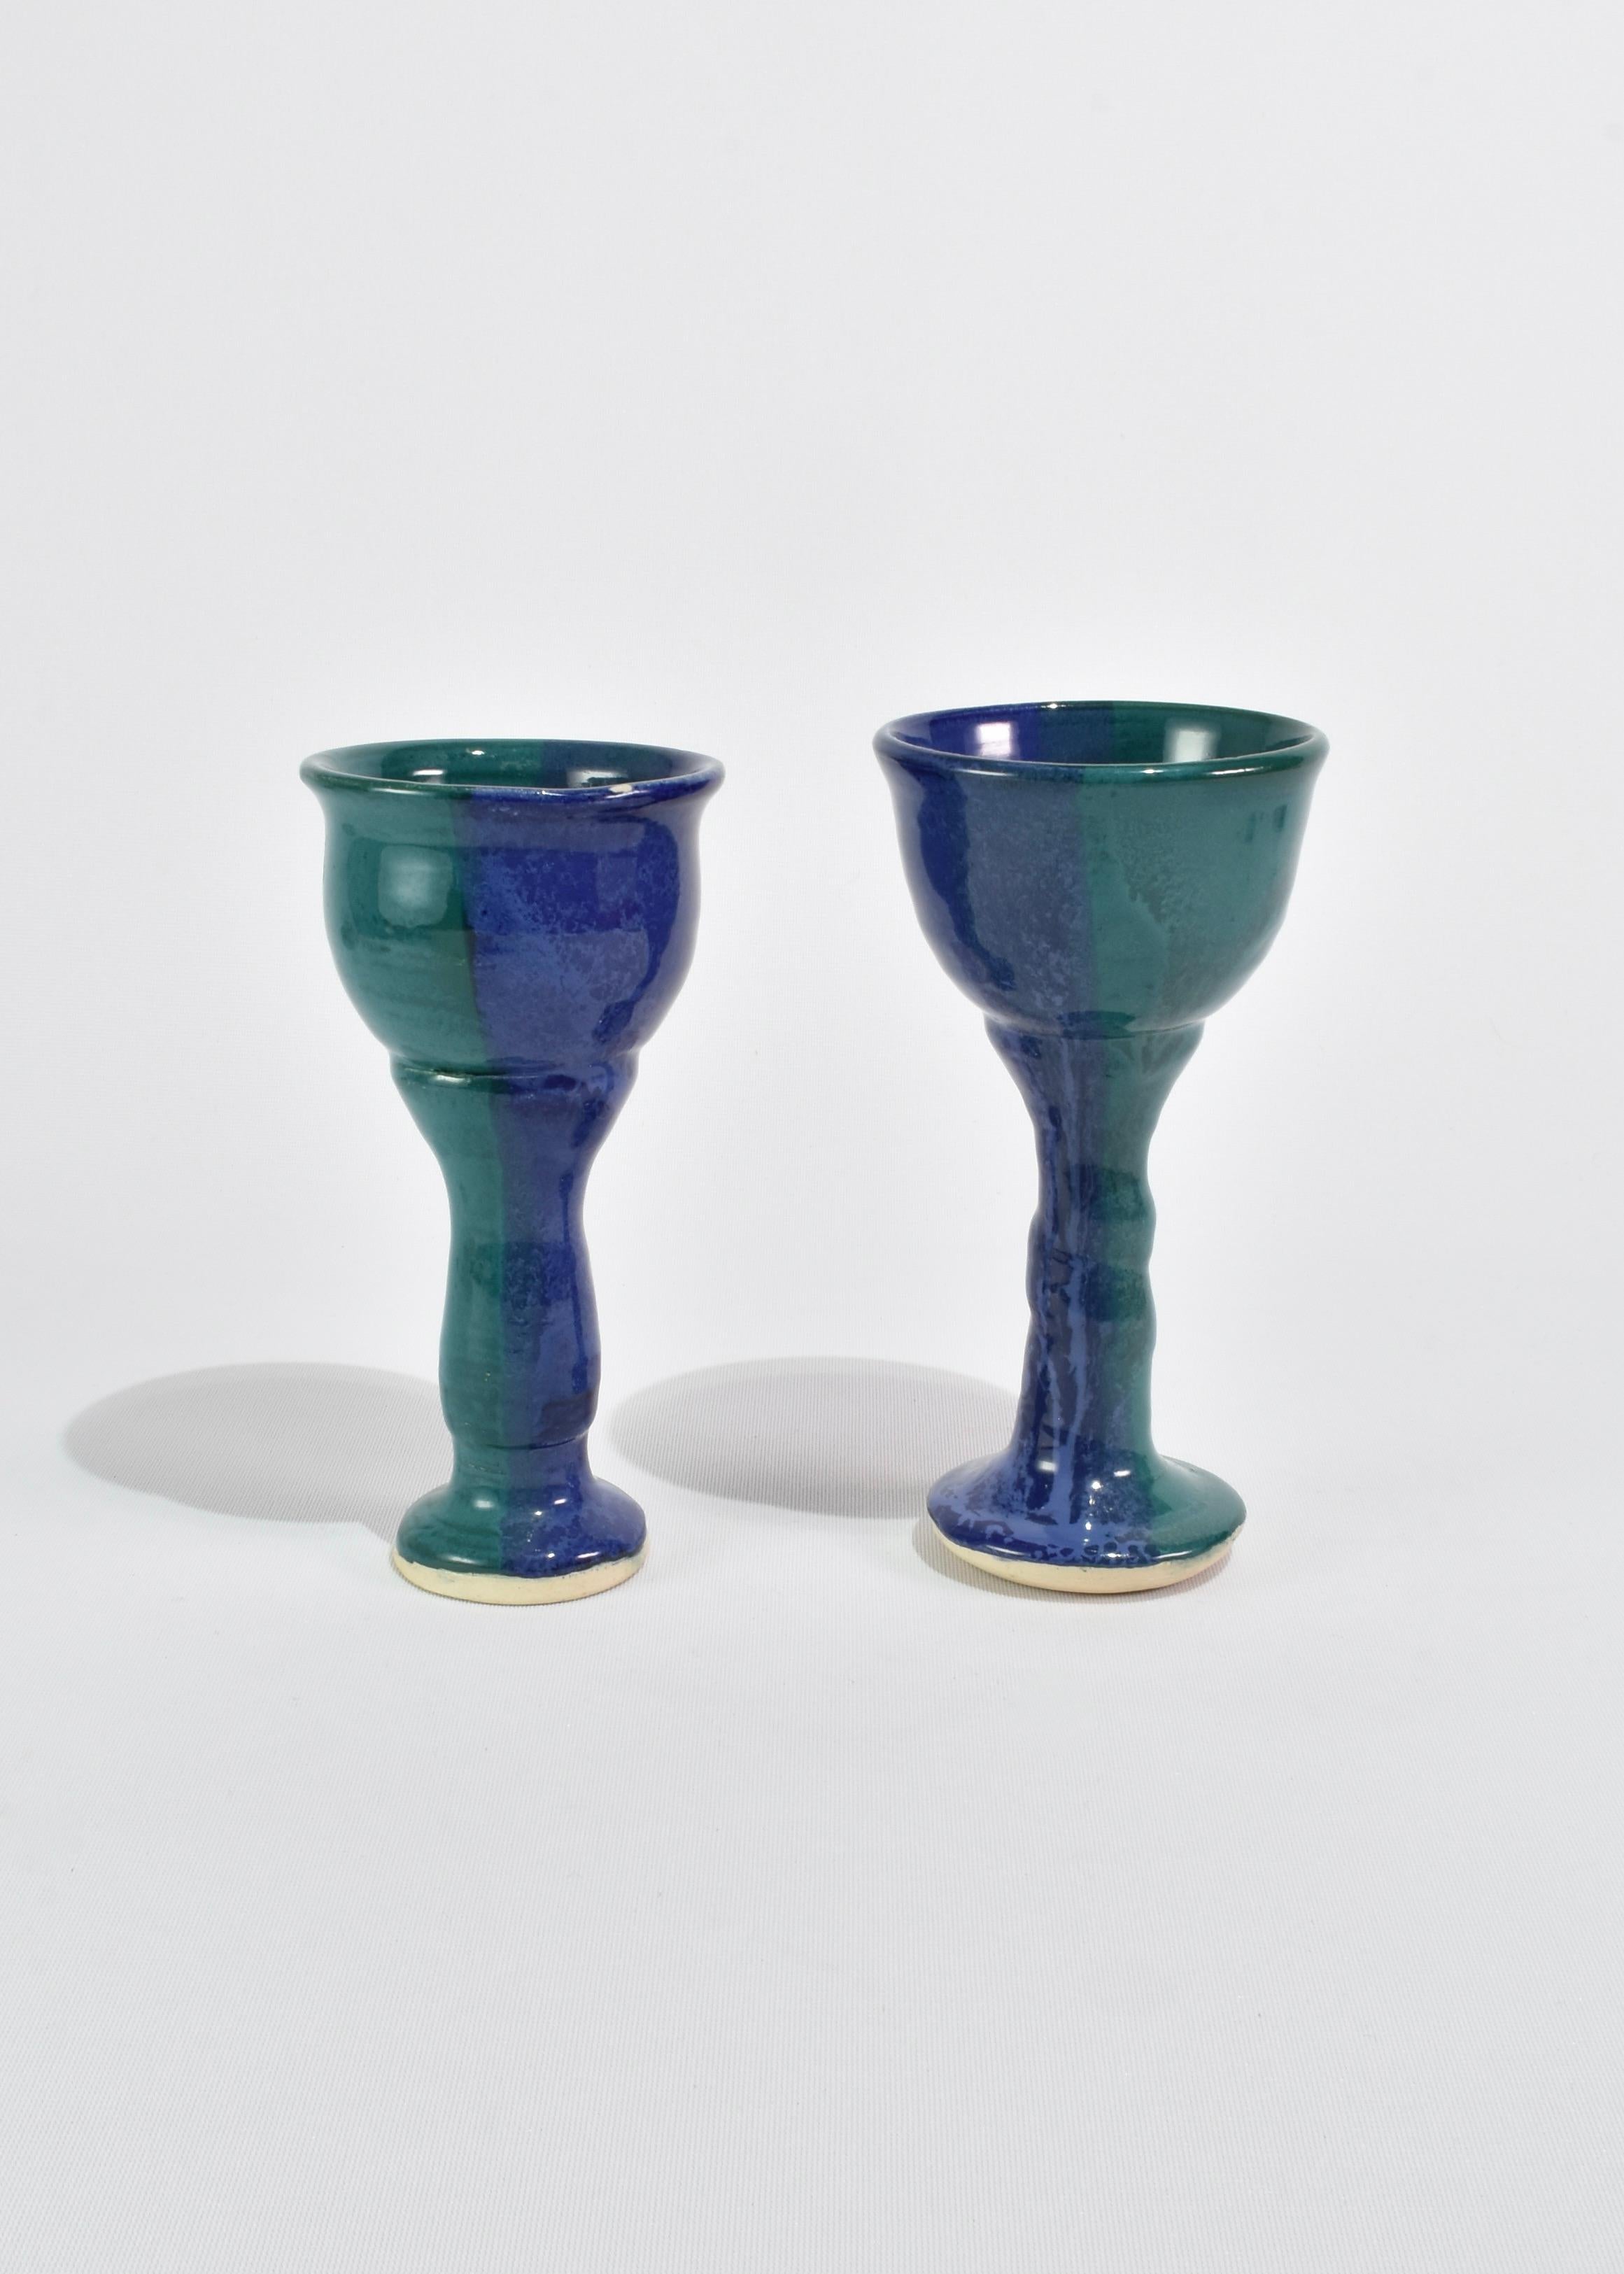 Vintage handmade ceramic goblet set of two in teal and blue.